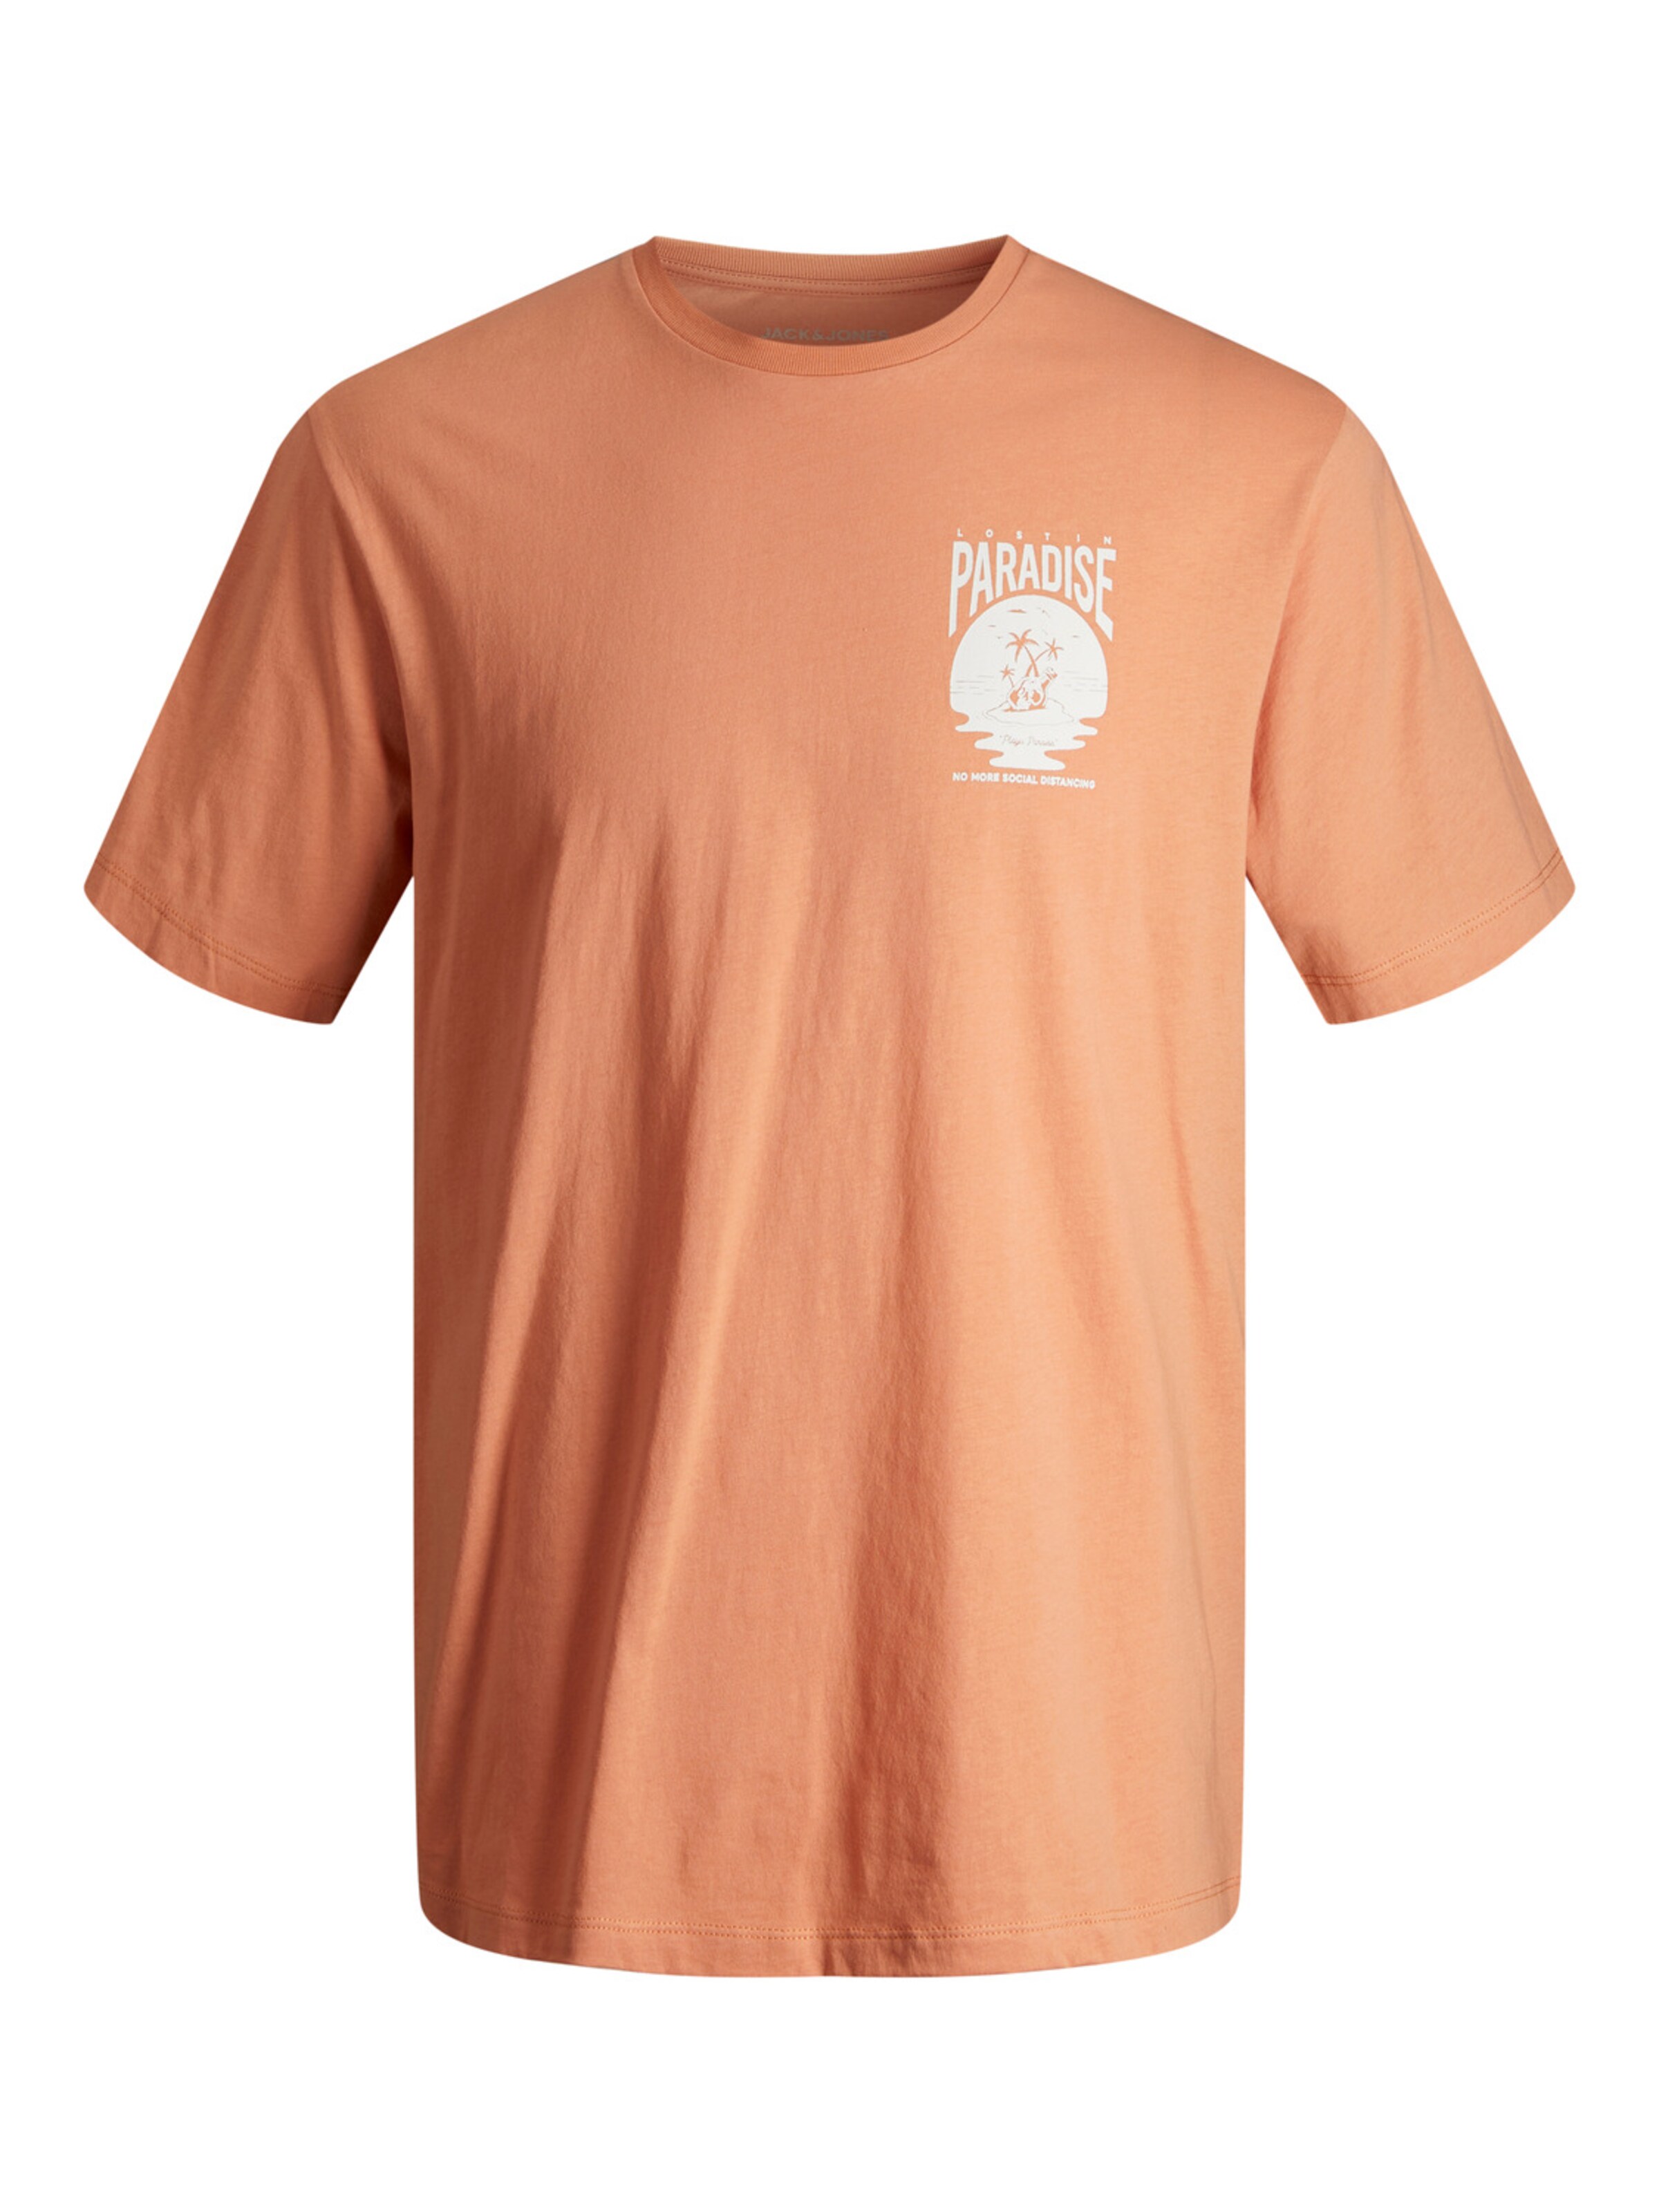 Jack & Jones Junior t-shirt 152 orange